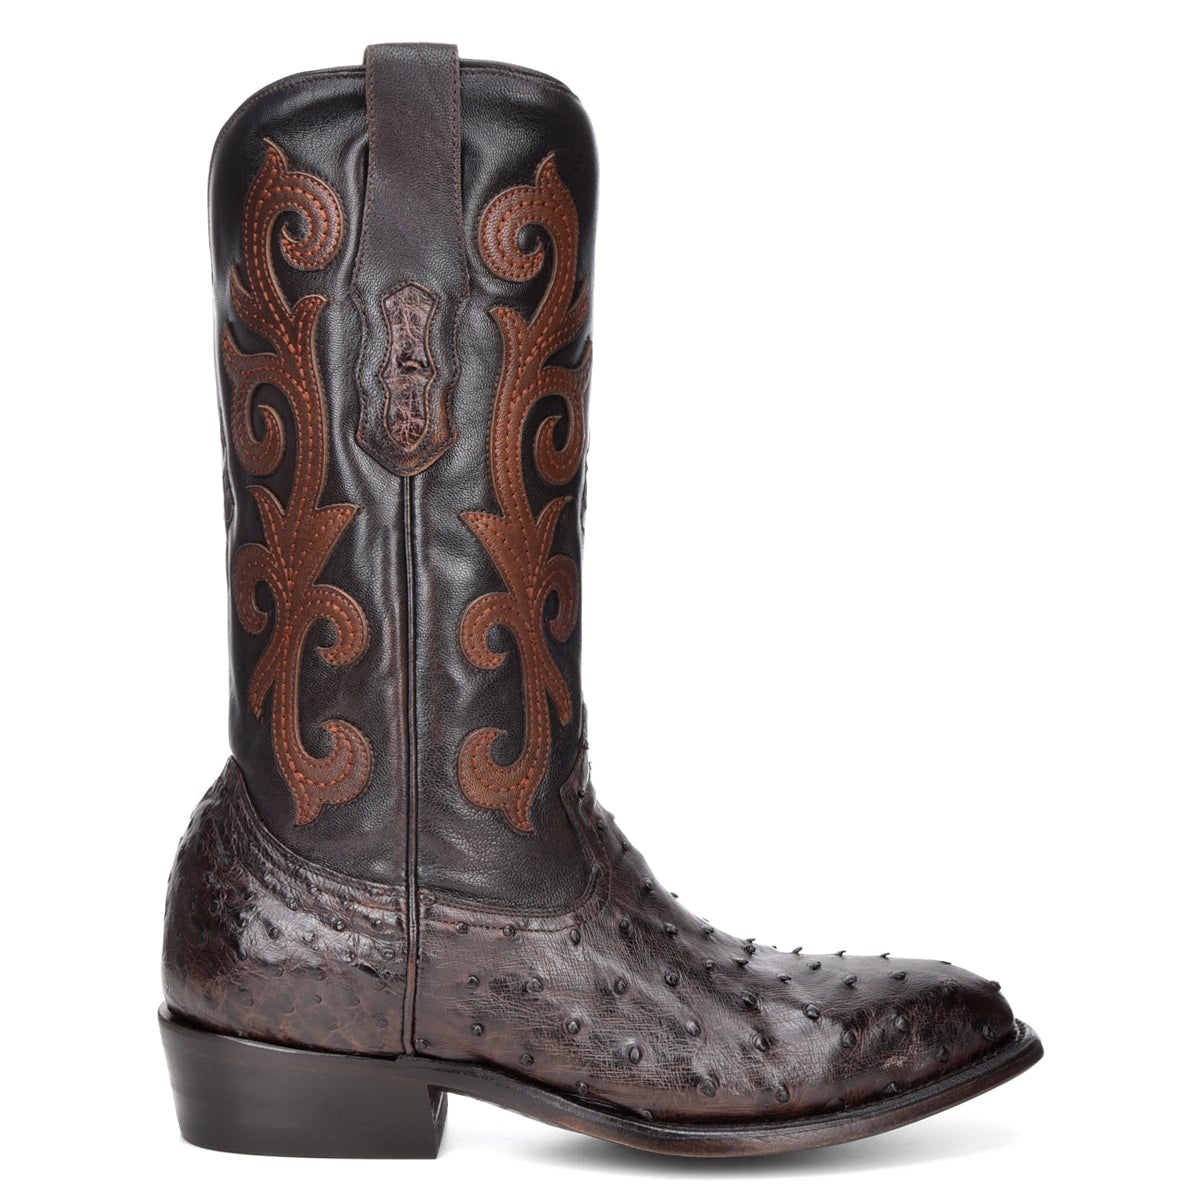 M2141 - Botas cowboy de de vestir Montana para hombre – Kuet.us - Cuadra Boots Western Cowboy, Casual Fashion and Dress Boots